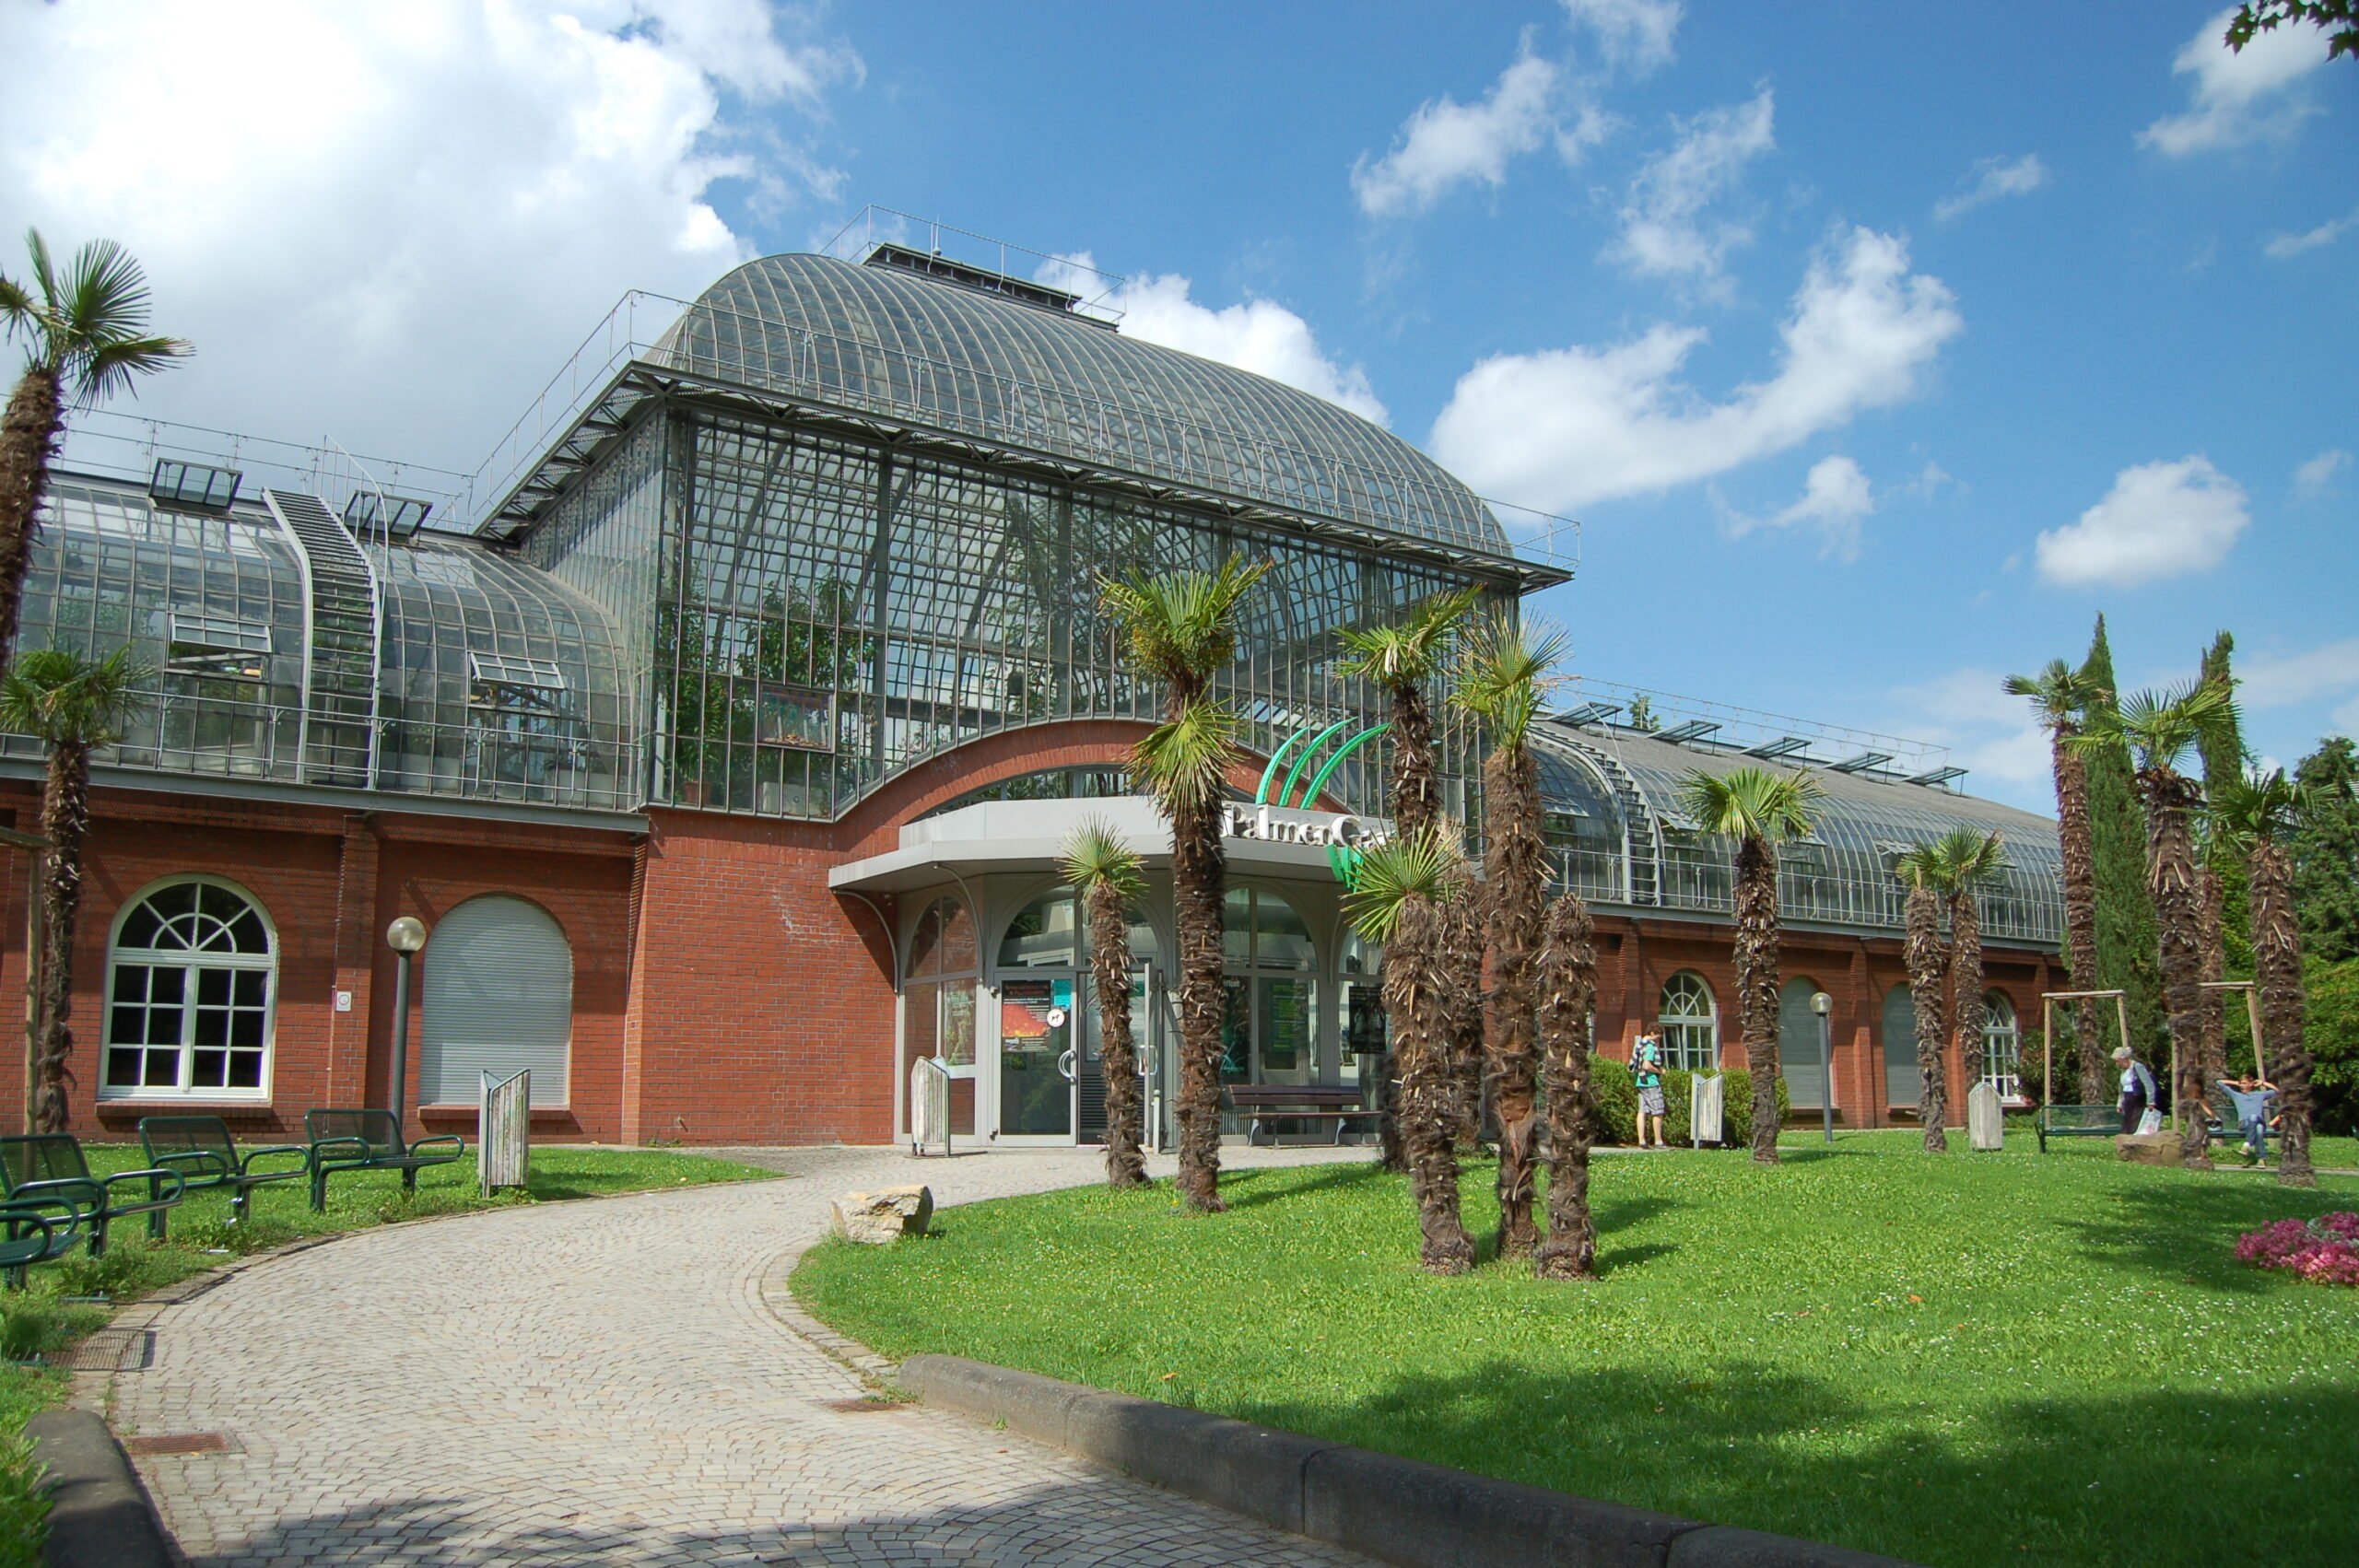 Palmengarten: The Famous Botanical Garden at the Heart of Frankfurt